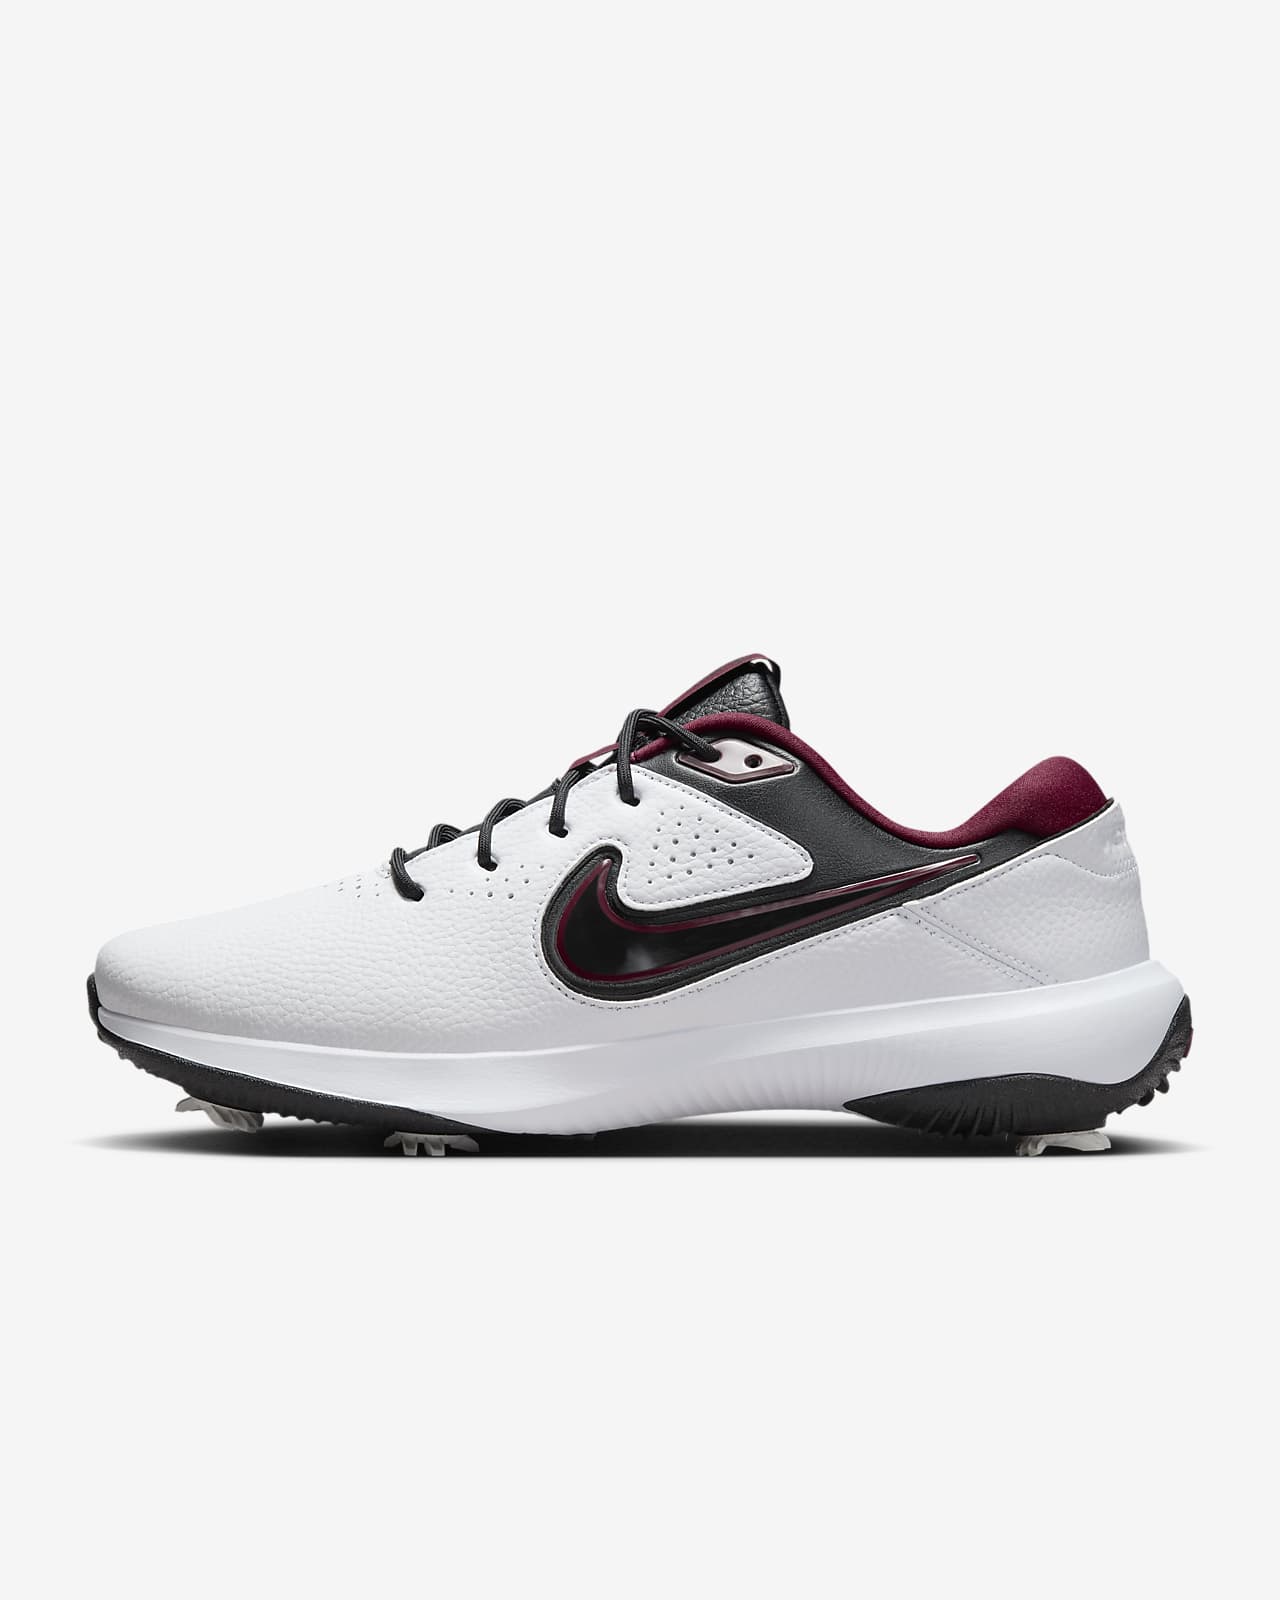 Nike Victory Pro 3 Men's Golf Shoes